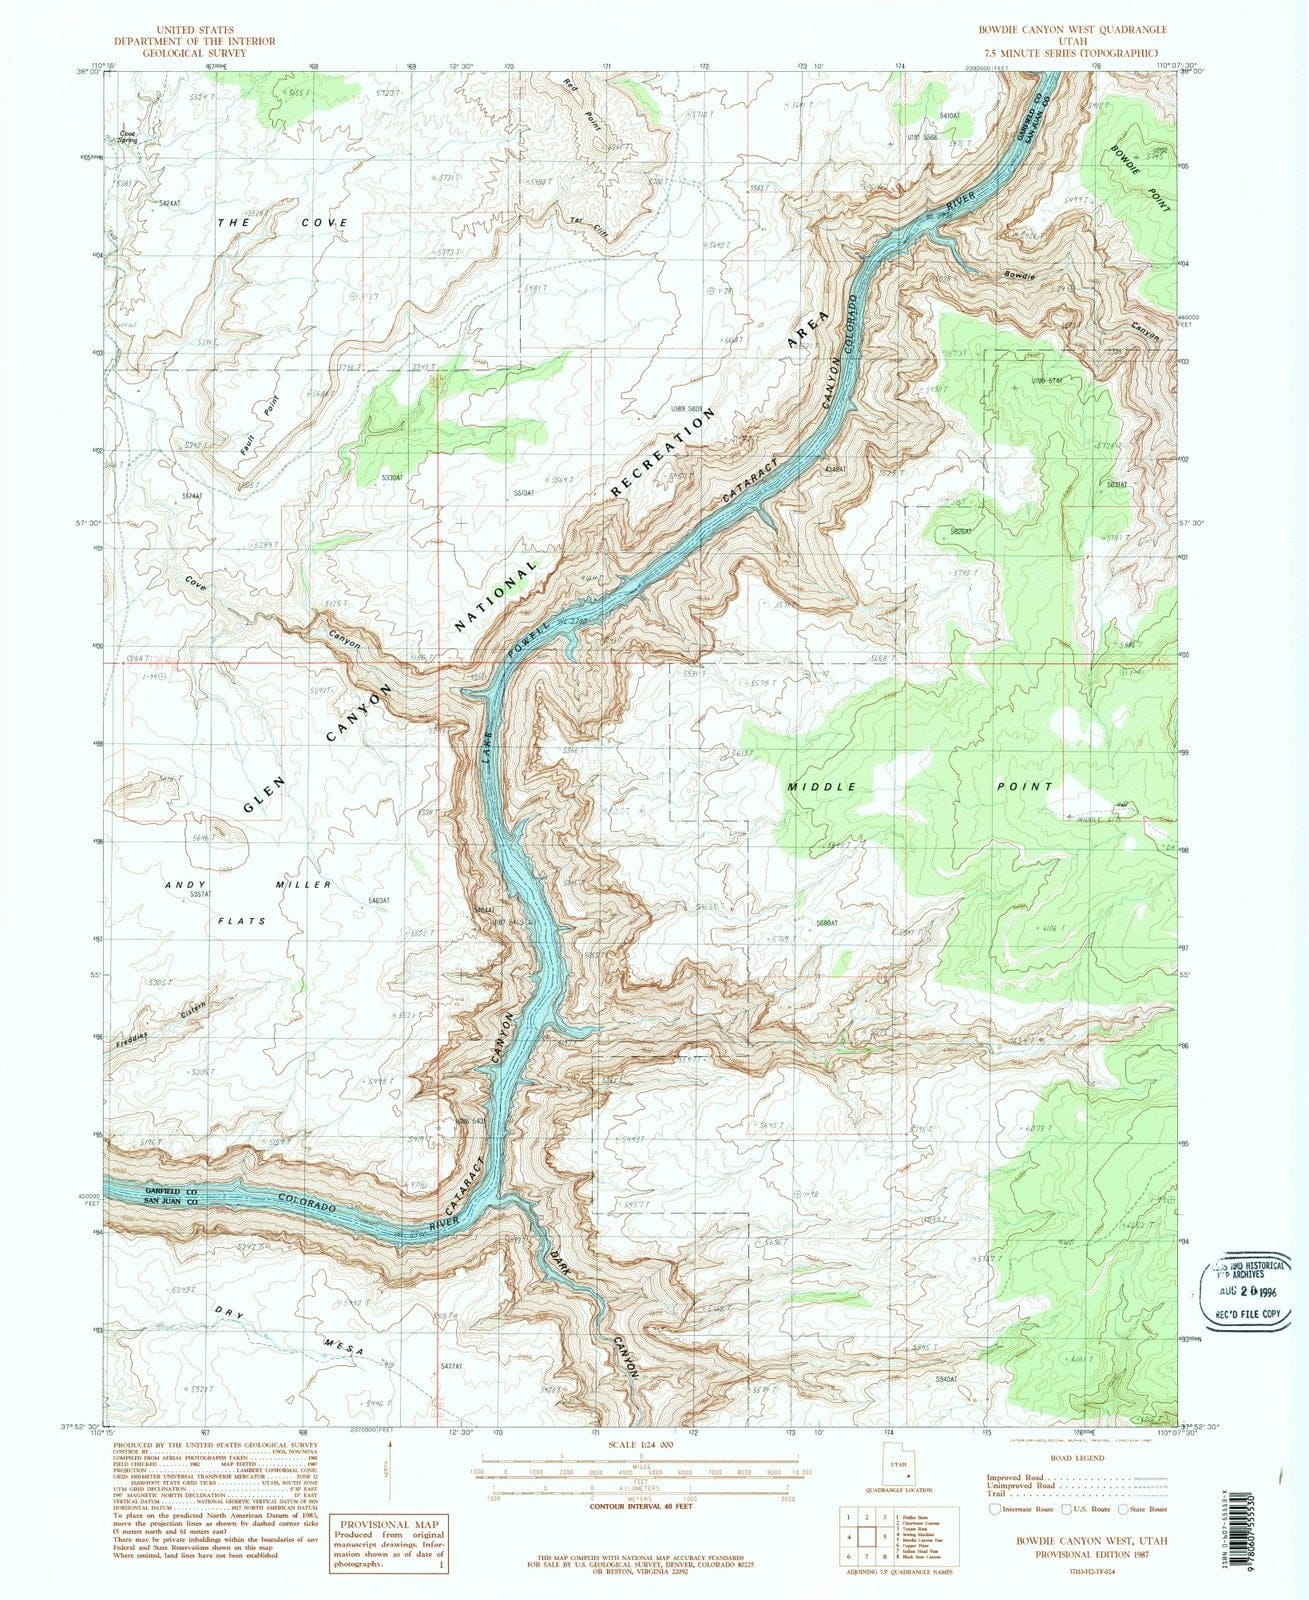 1987 Bowdie Canyon West, UT - Utah - USGS Topographic Map